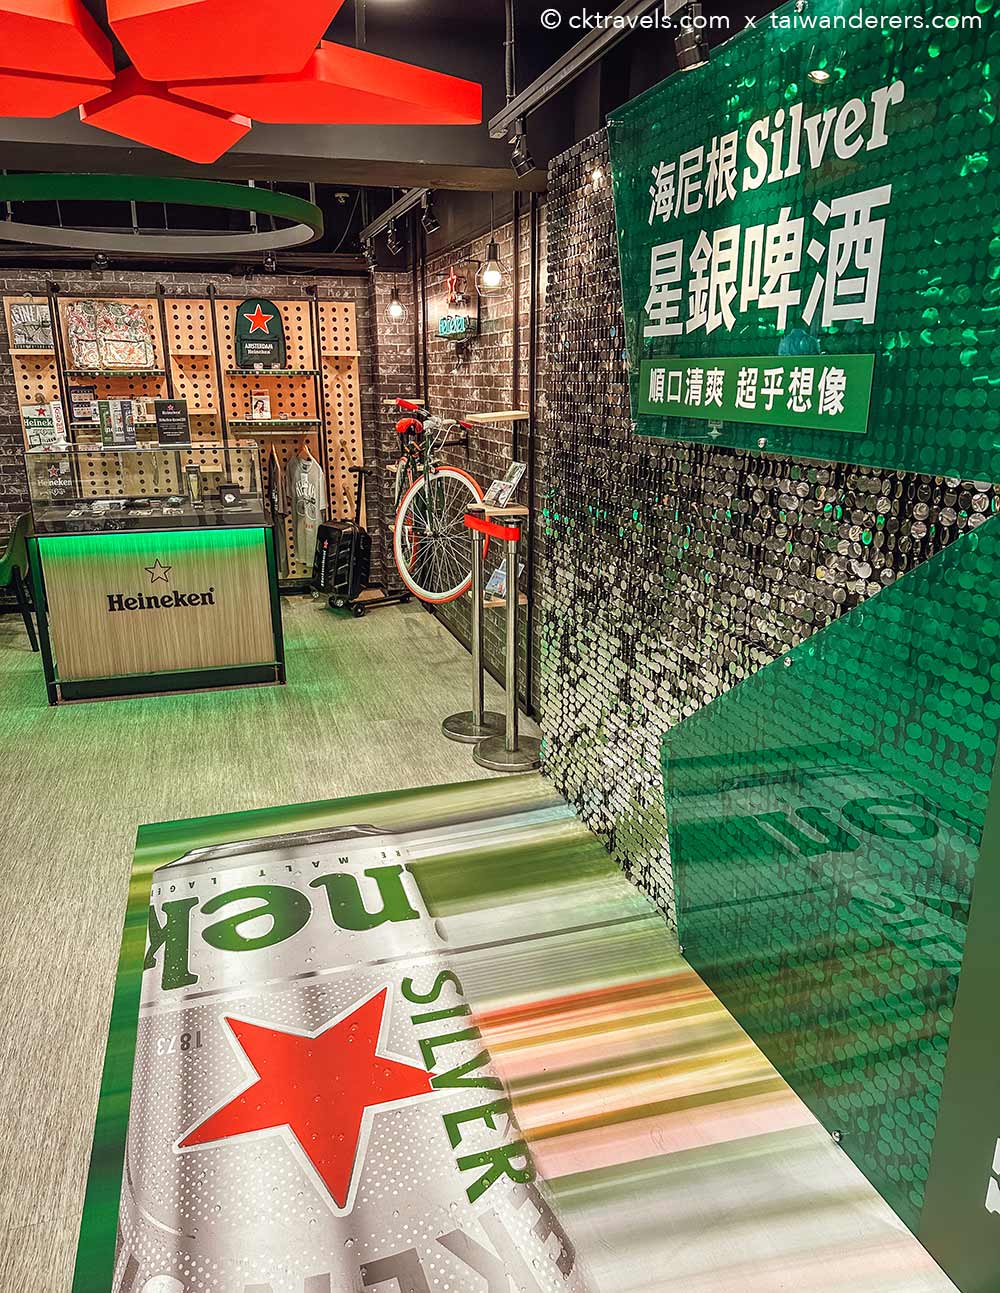 Heineken themed 7-eleven convenience store in Taipei Taiwan